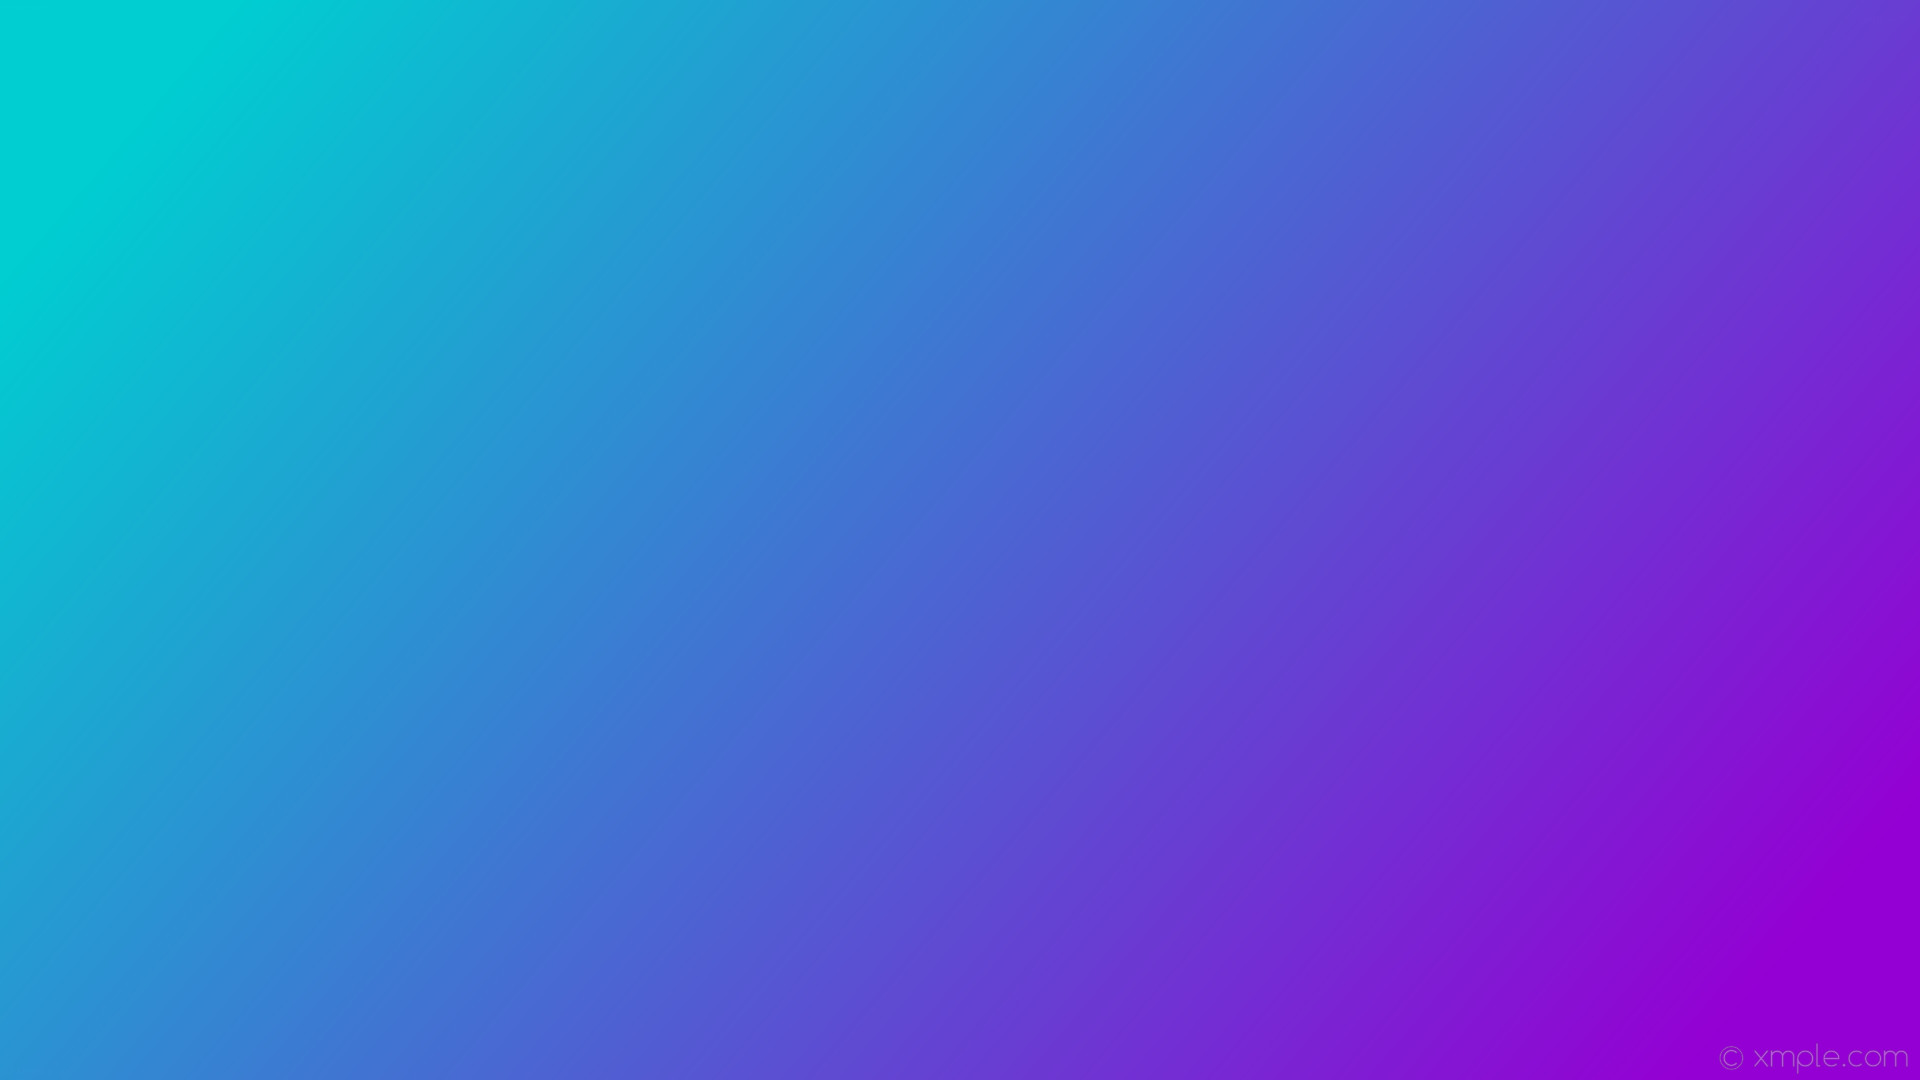 Wallpaper gradient purple blue linear dark violet dark turquoise d3 ced1 345